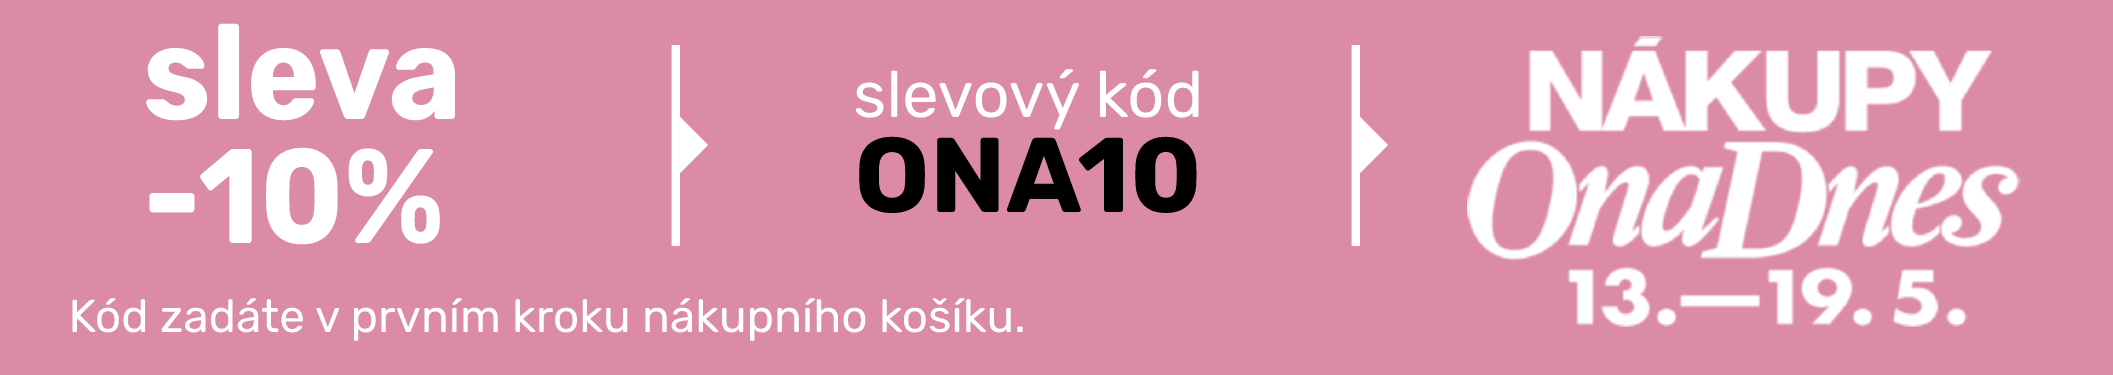 ona-10